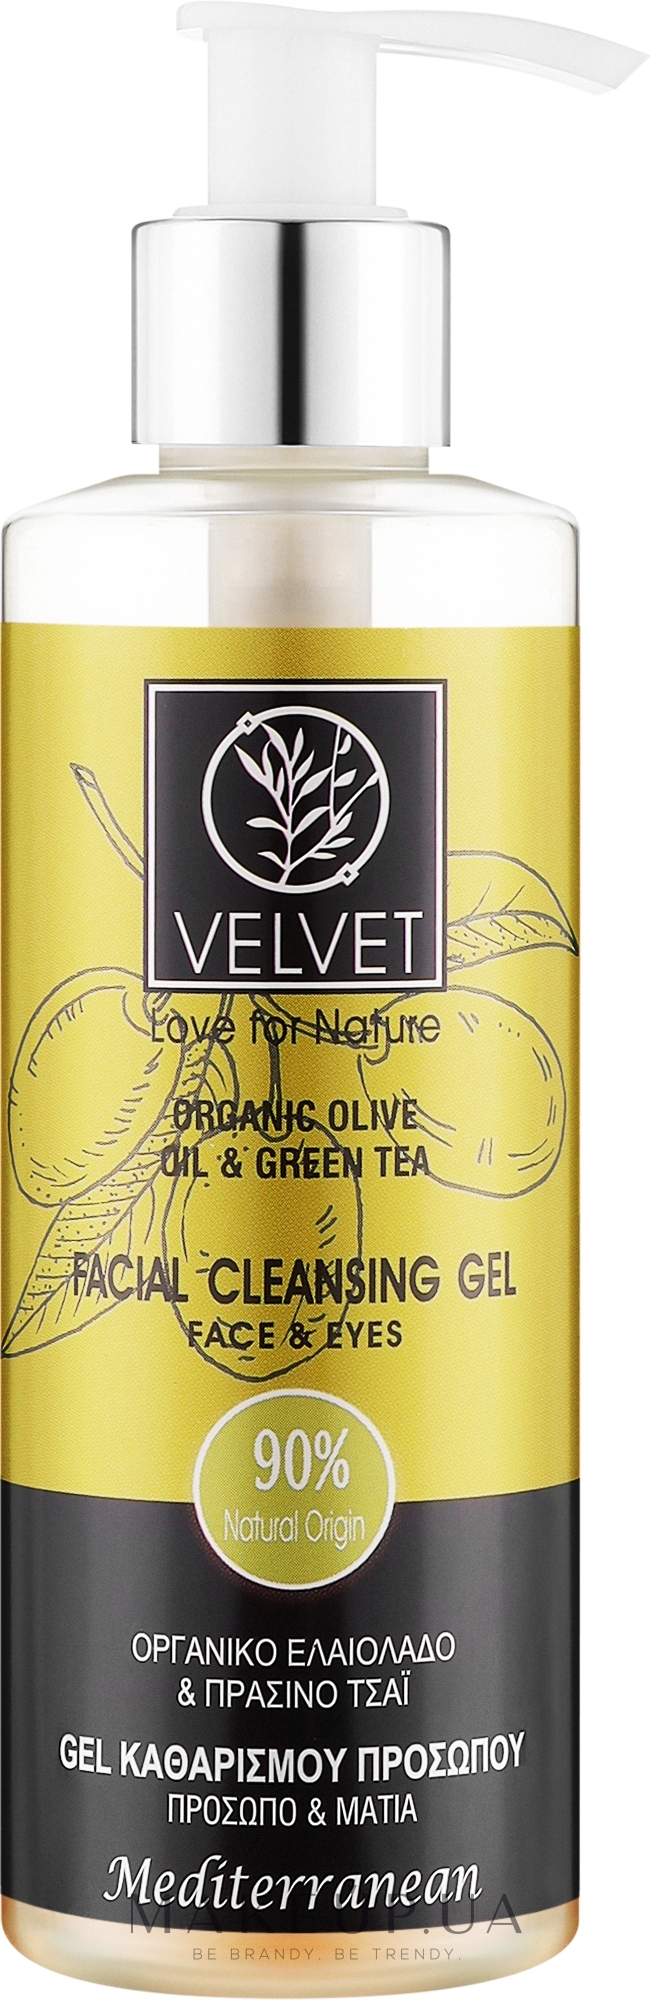 Очищающий гель для лица и глаз - Velvet Love for Nature Organic Olive & Green Tea Face Gel — фото 200ml